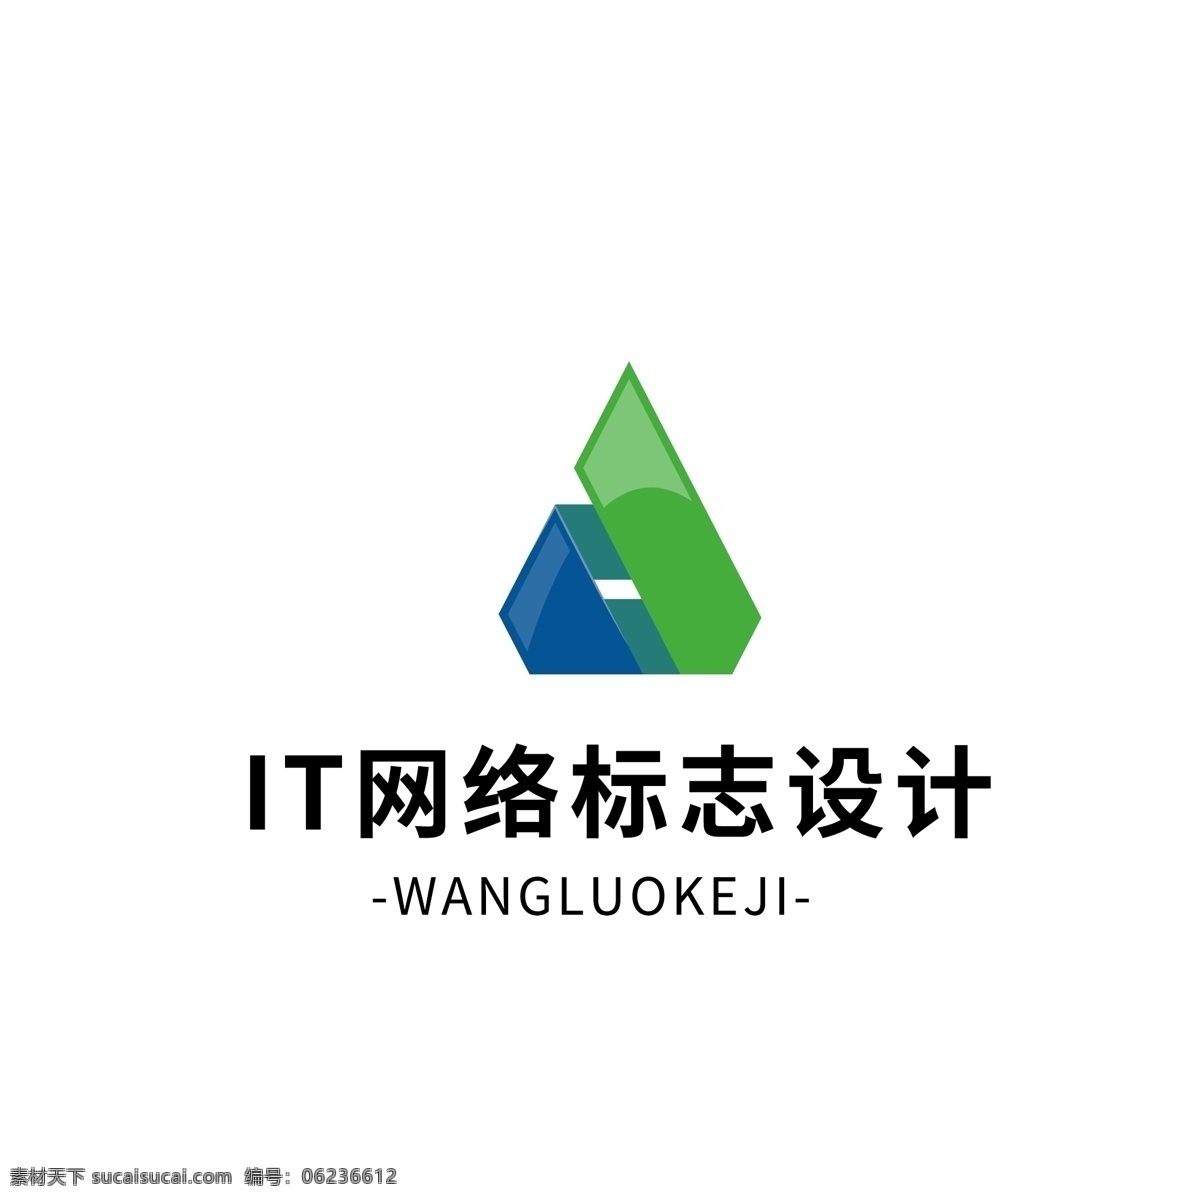 it 网络 标志设计 logo 简约 绿色 蓝色 图形 三角 矢量